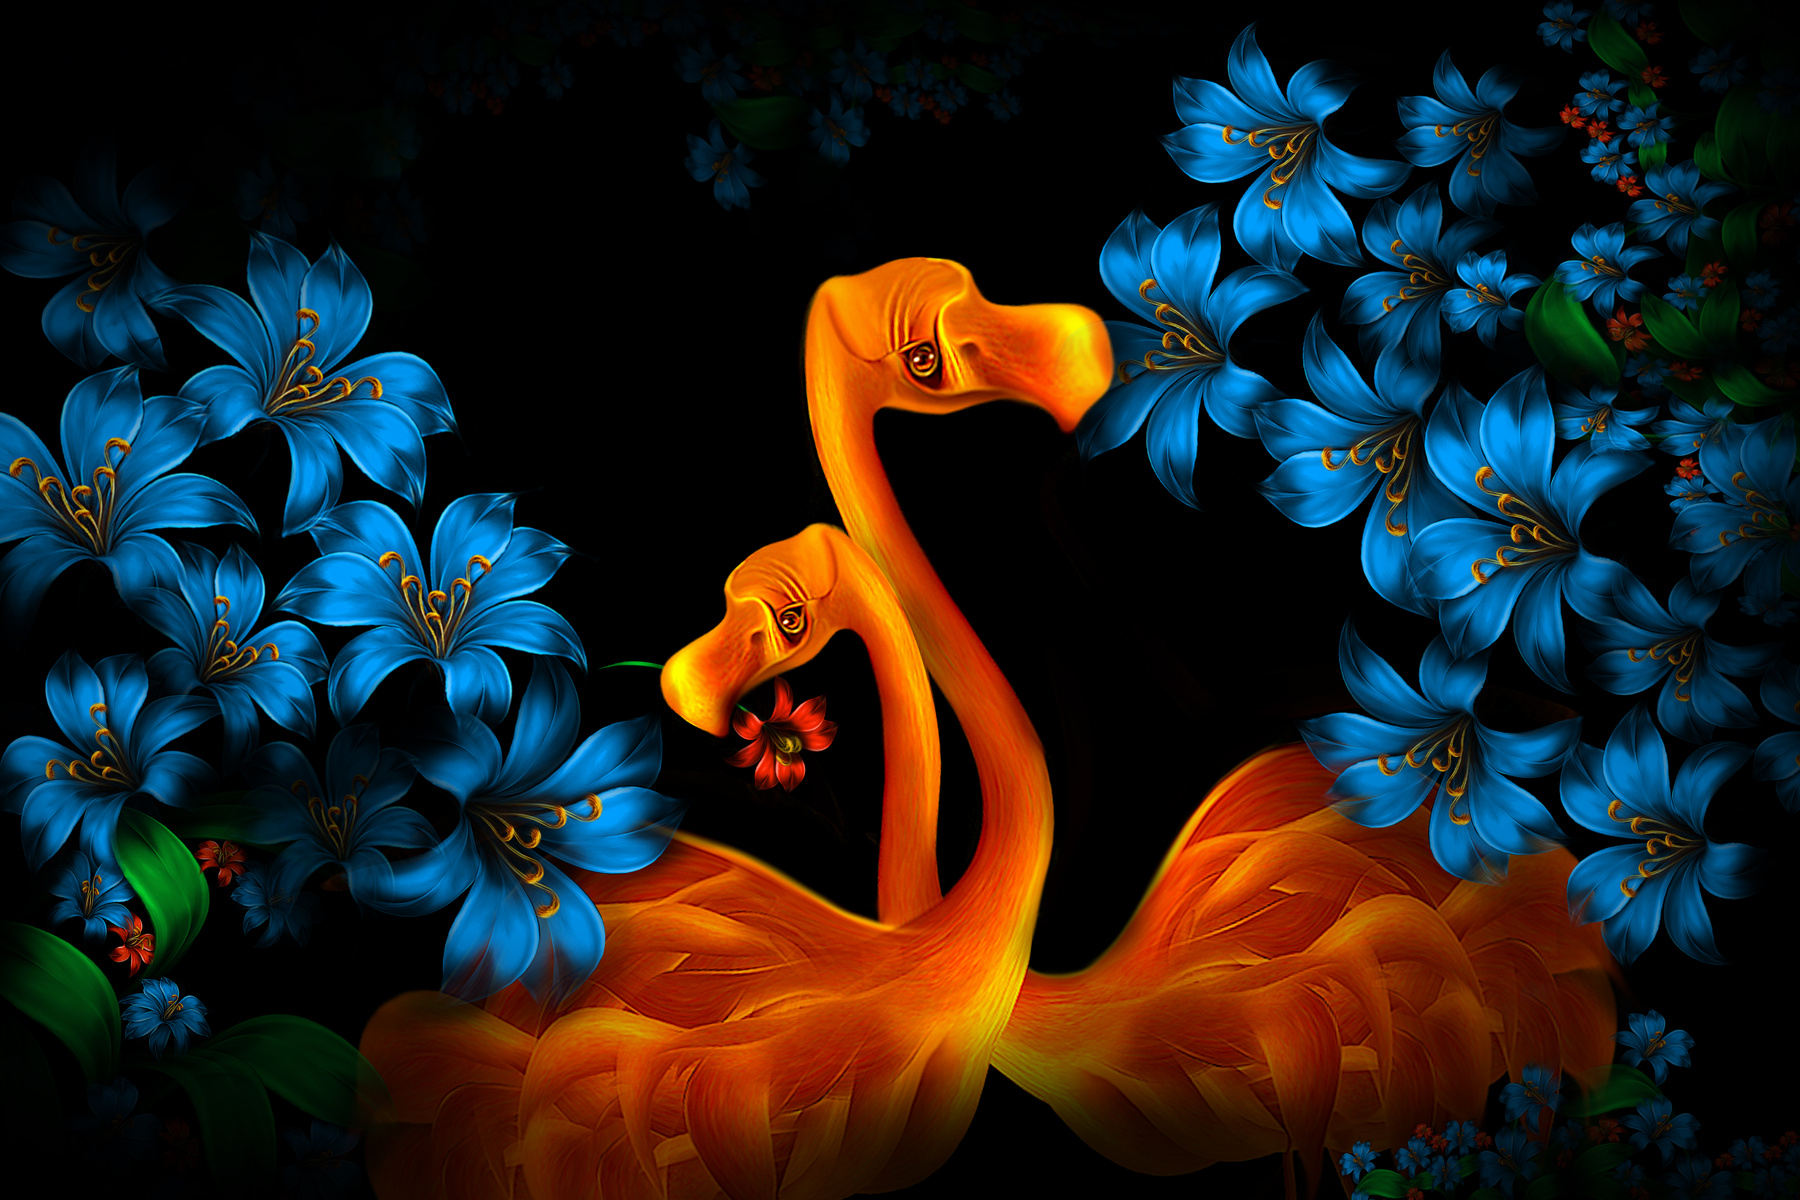 Свидание в ночи фото-рисунок иллюстрация контраст прогулка свидание романтика Фламинго пара цветы свет цвет Коллаж GeminiArt Понравилось